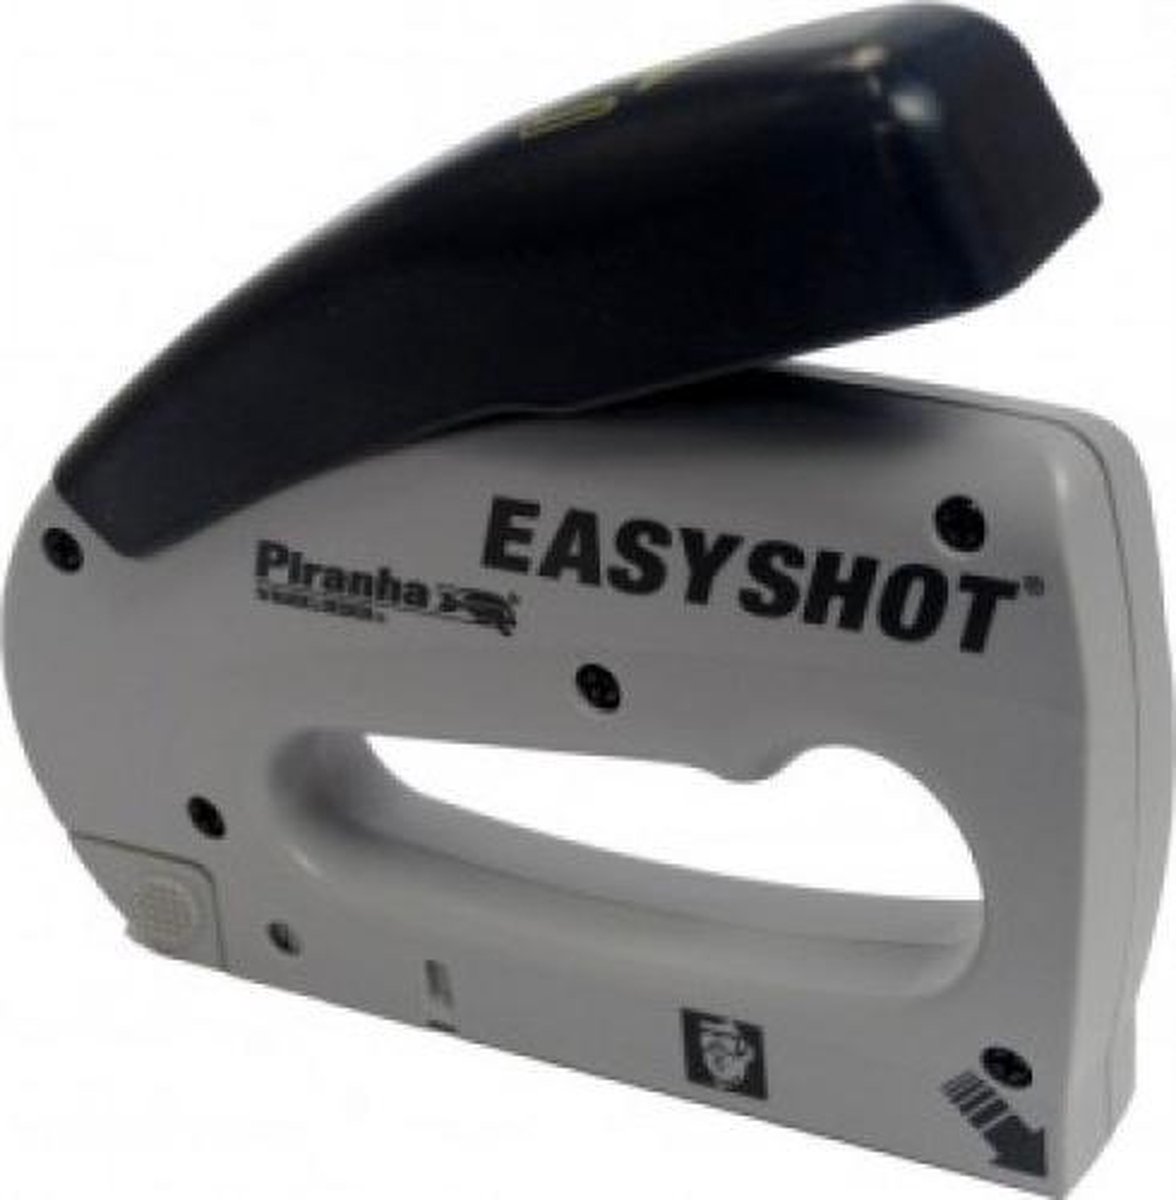 passend Premisse goedkeuren Black & Decker Piranha Tacker - Easy Shot - Nietmachine | bol.com